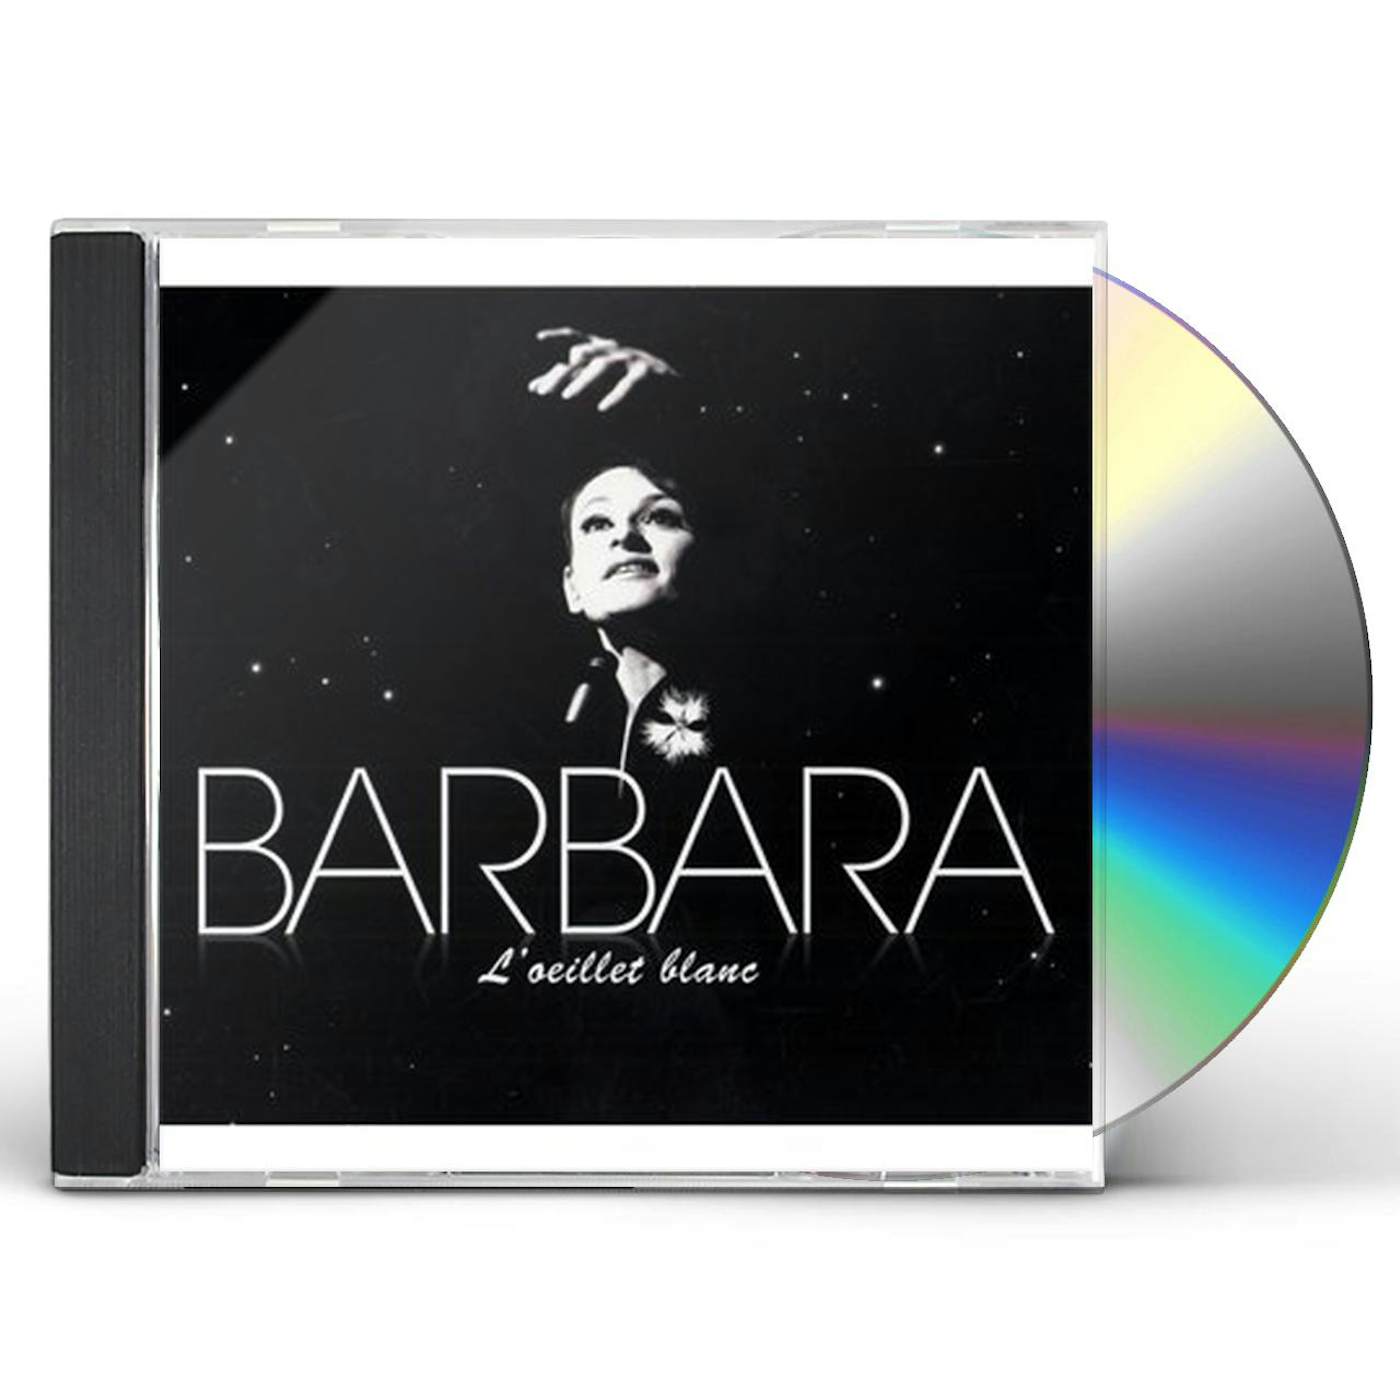 Barbara LOEILLET BLANC CD